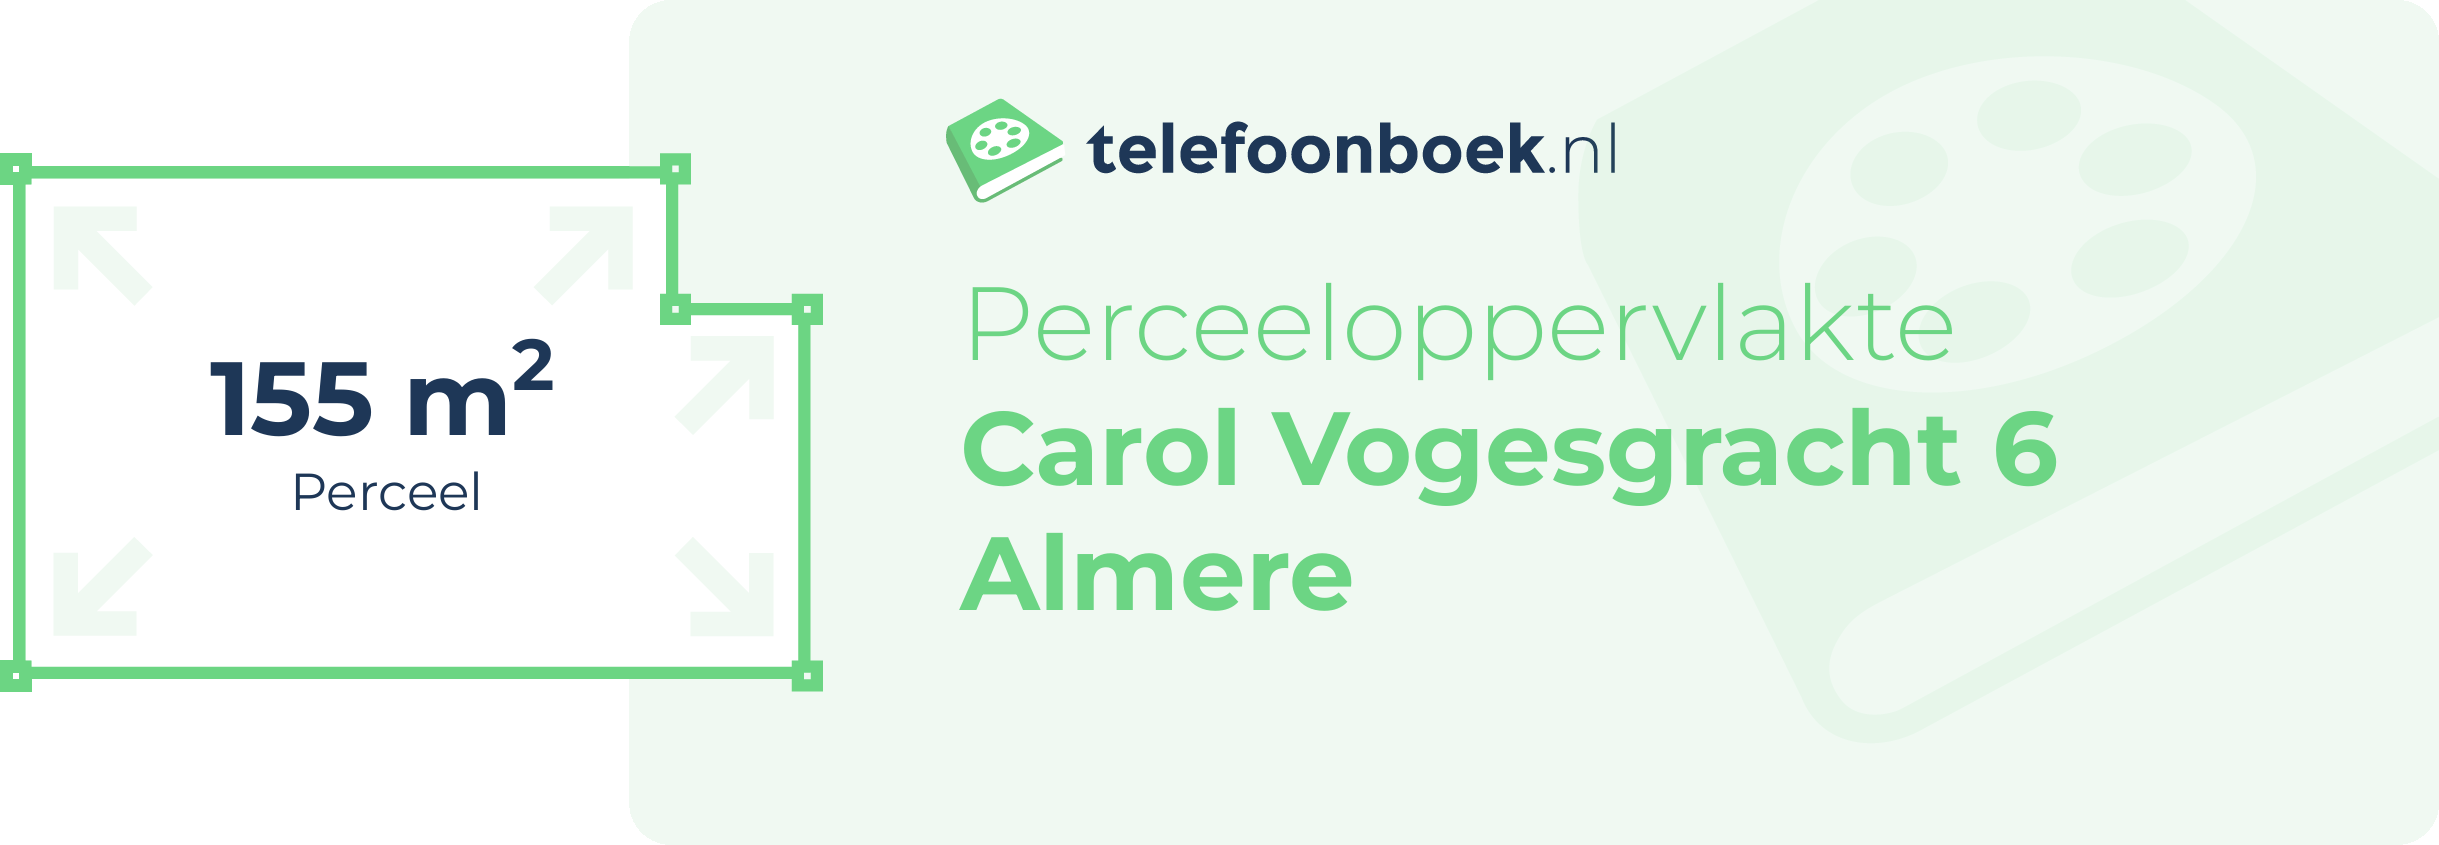 Perceeloppervlakte Carol Vogesgracht 6 Almere